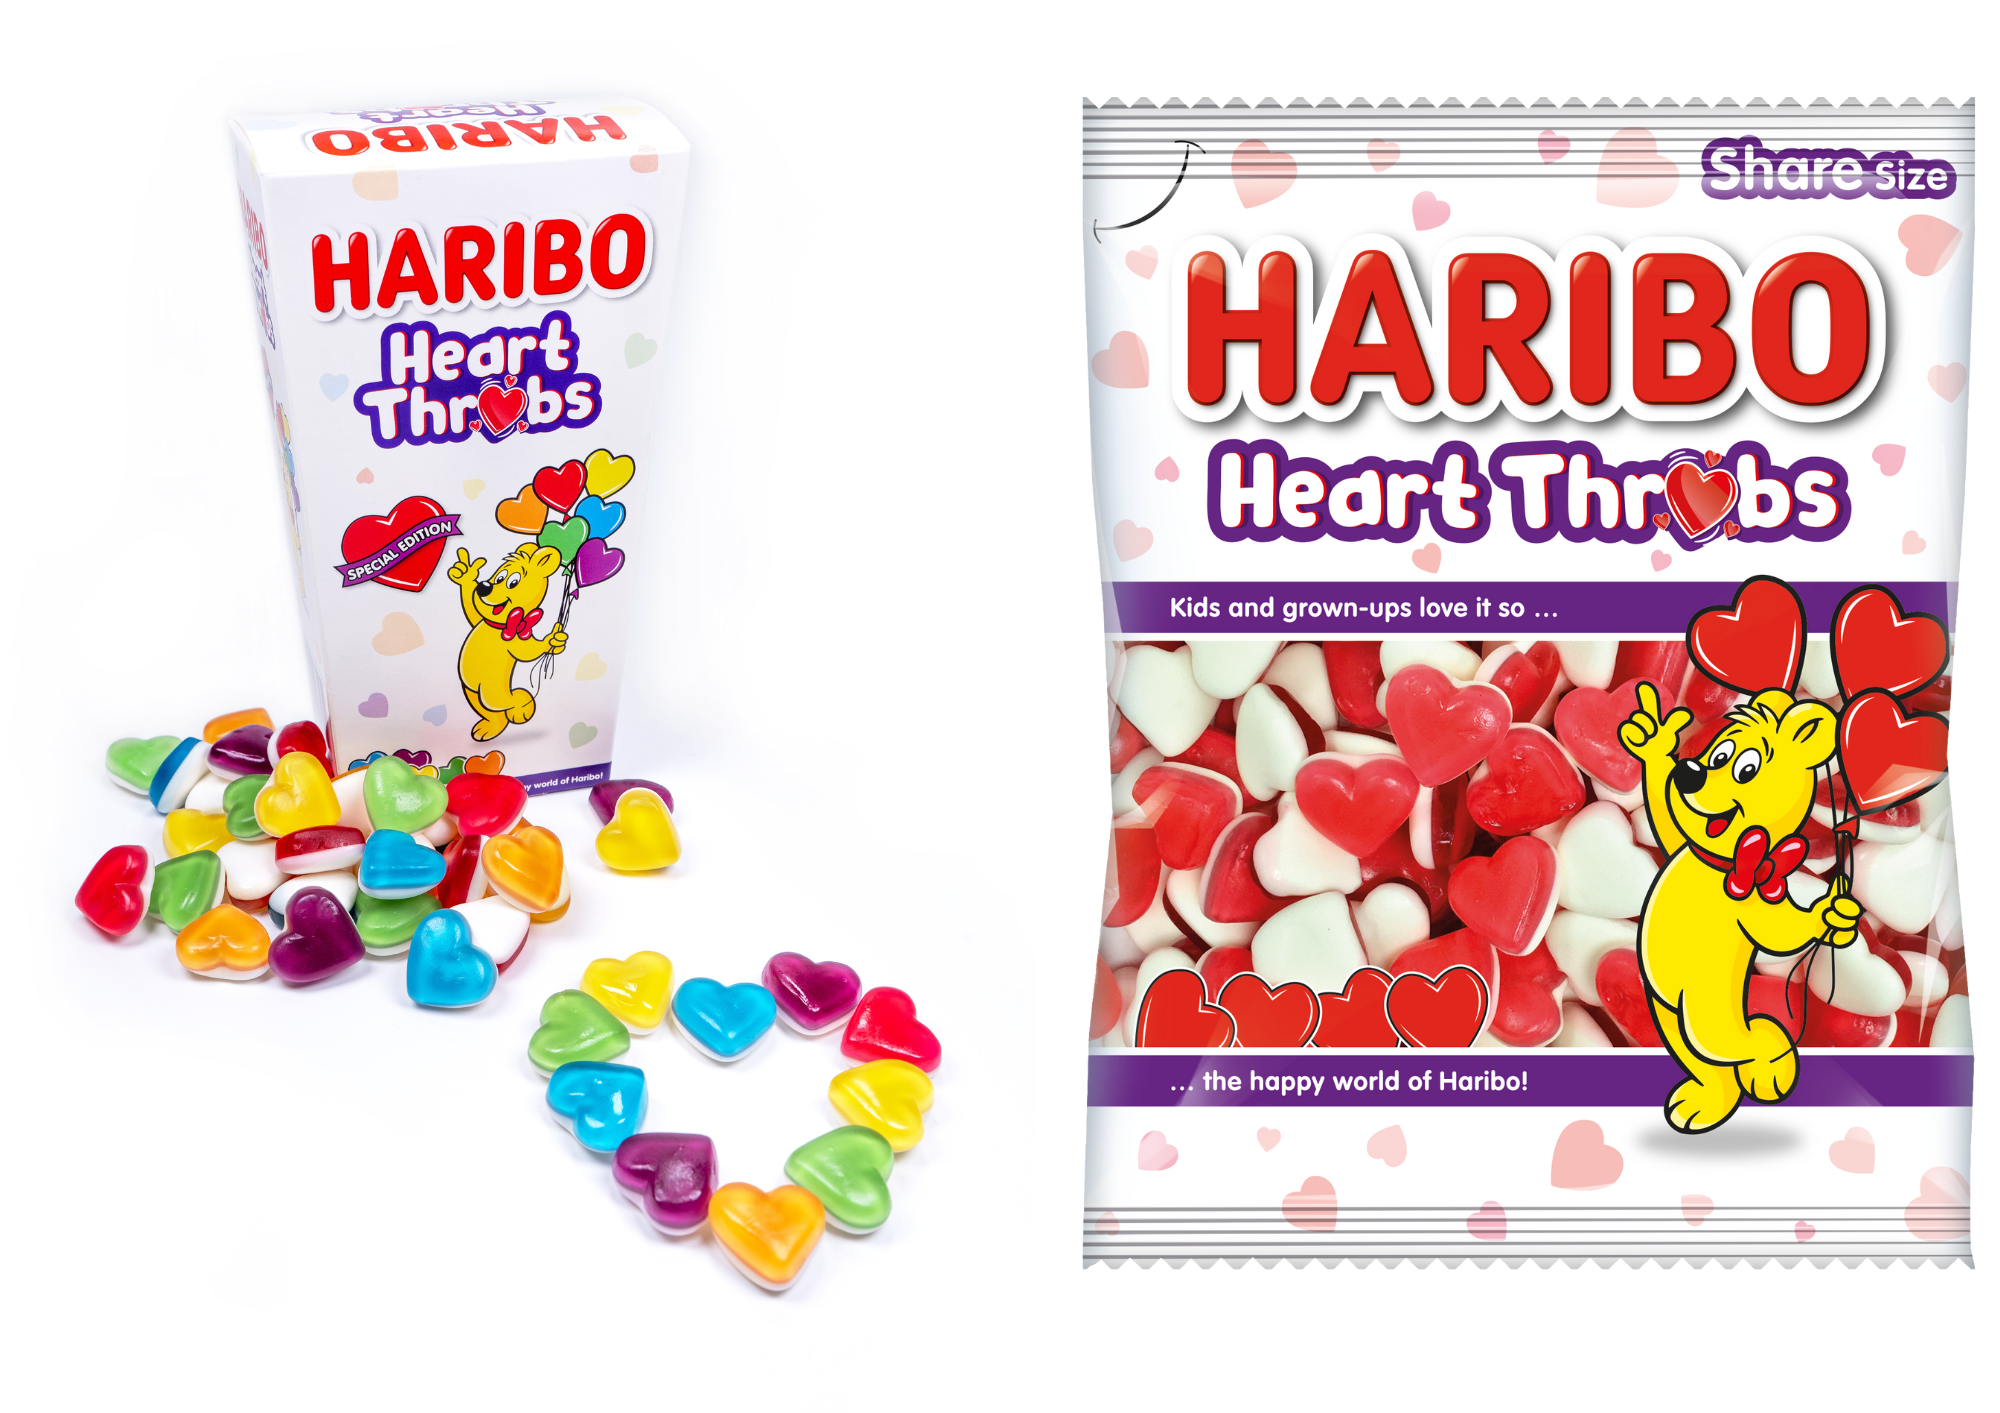 Haribo unveils Valentine's Day confectionery line